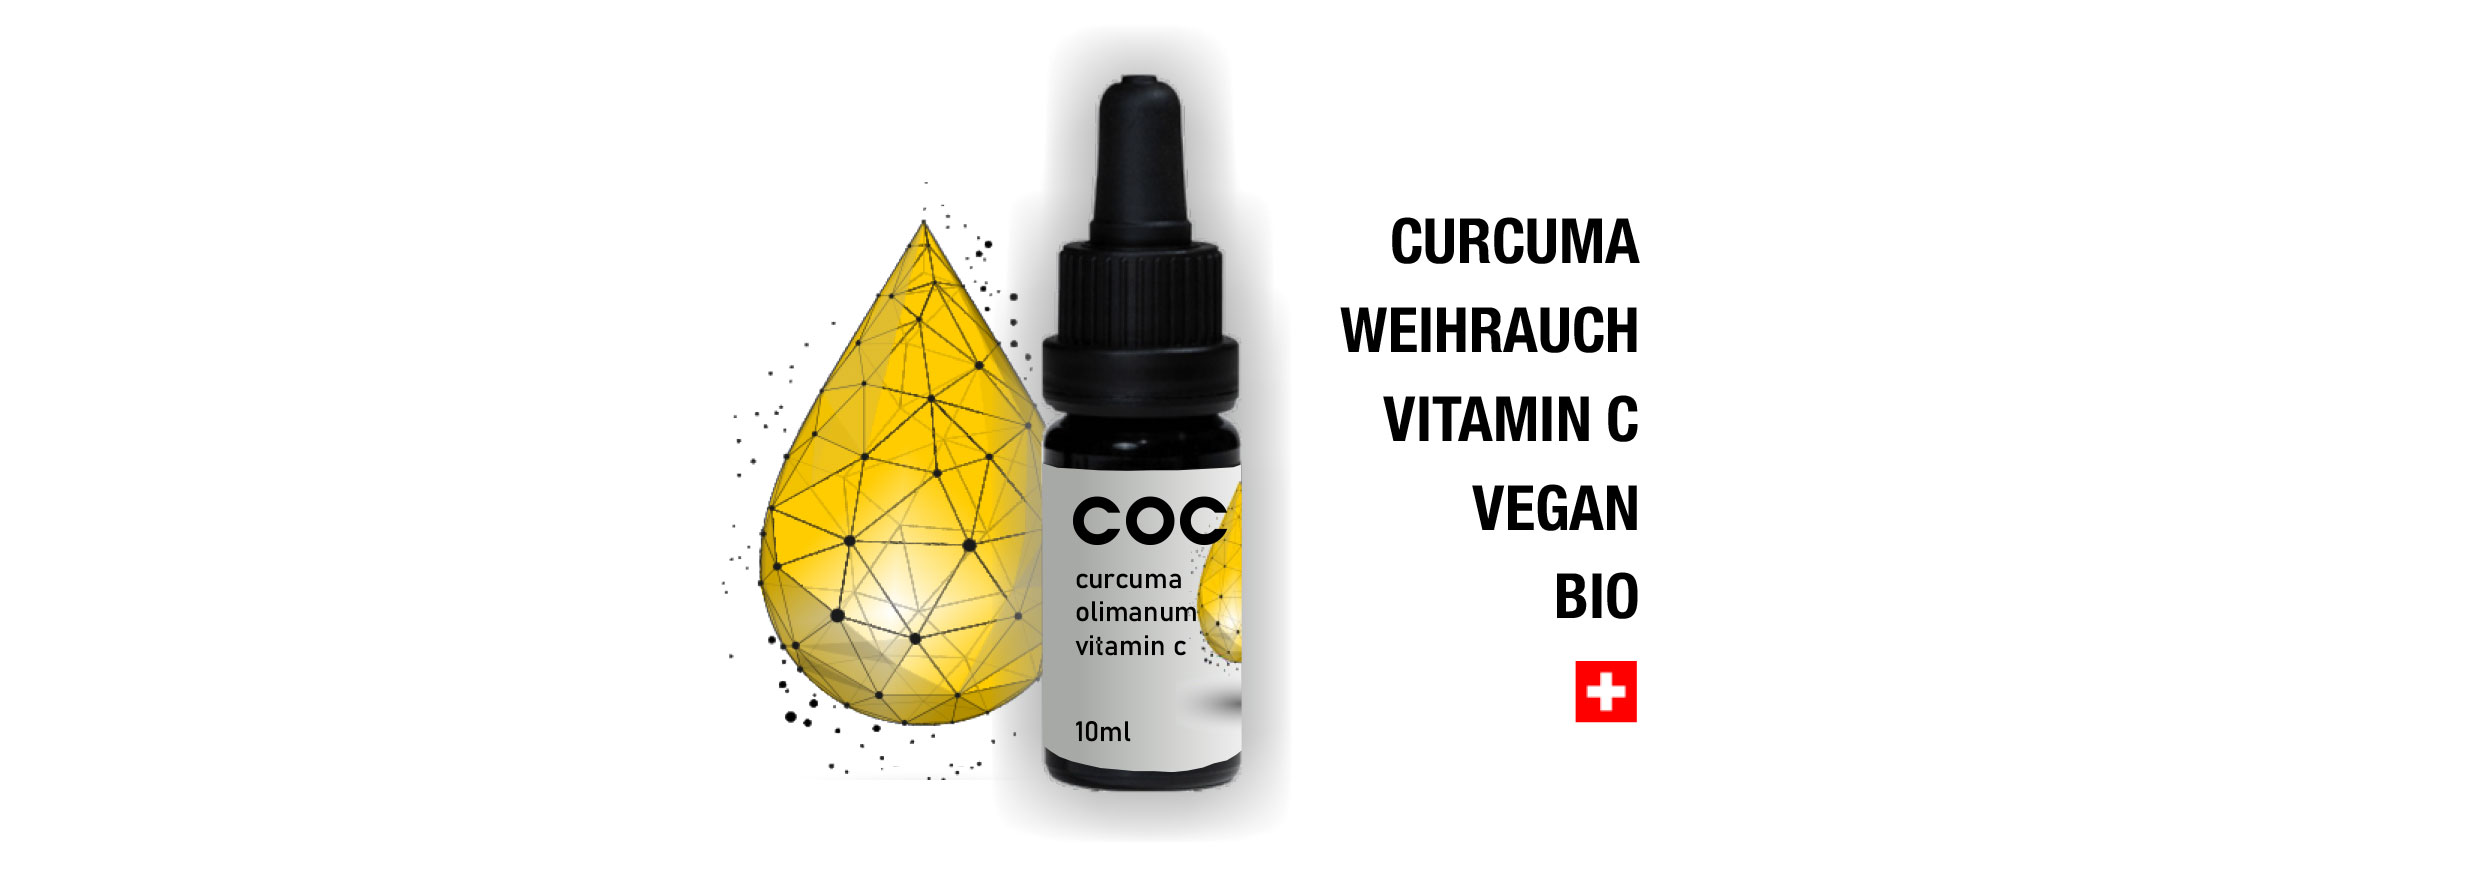 COC Curcuma Weihrauch Vitamin C